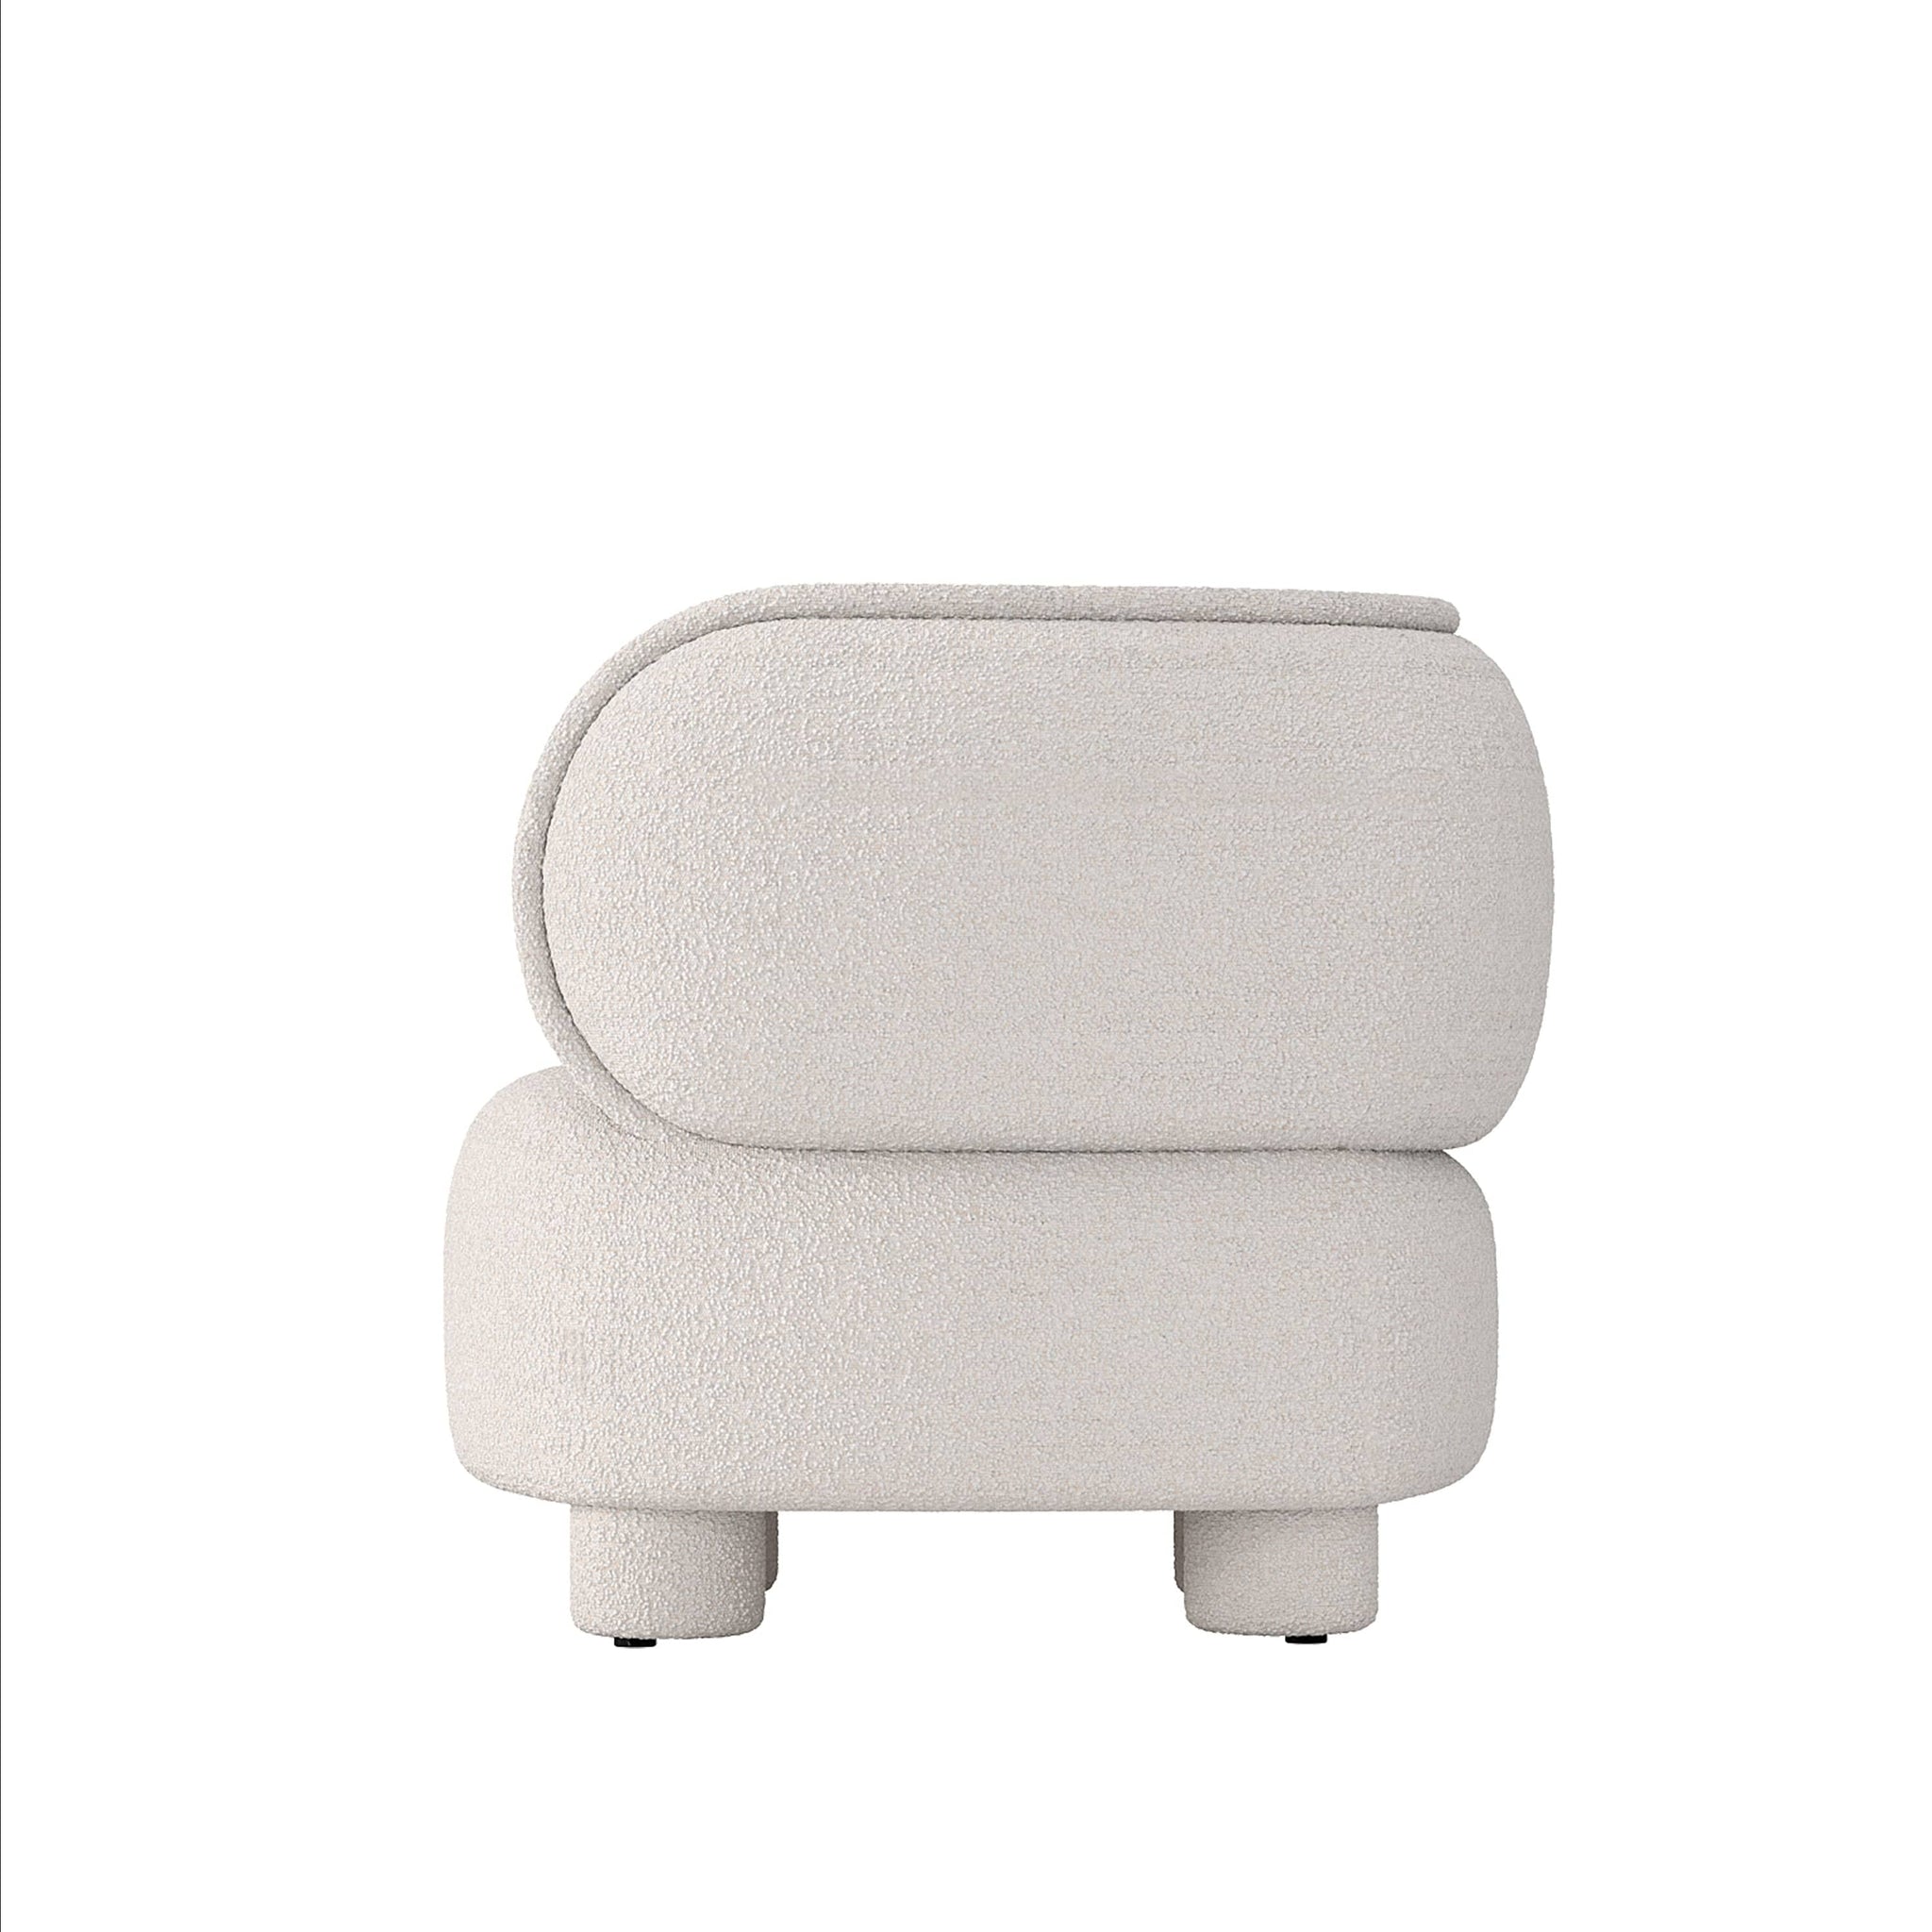 Buy Ding Lounge Chair - Maya Cream Boucle by Grado online - RJ Living